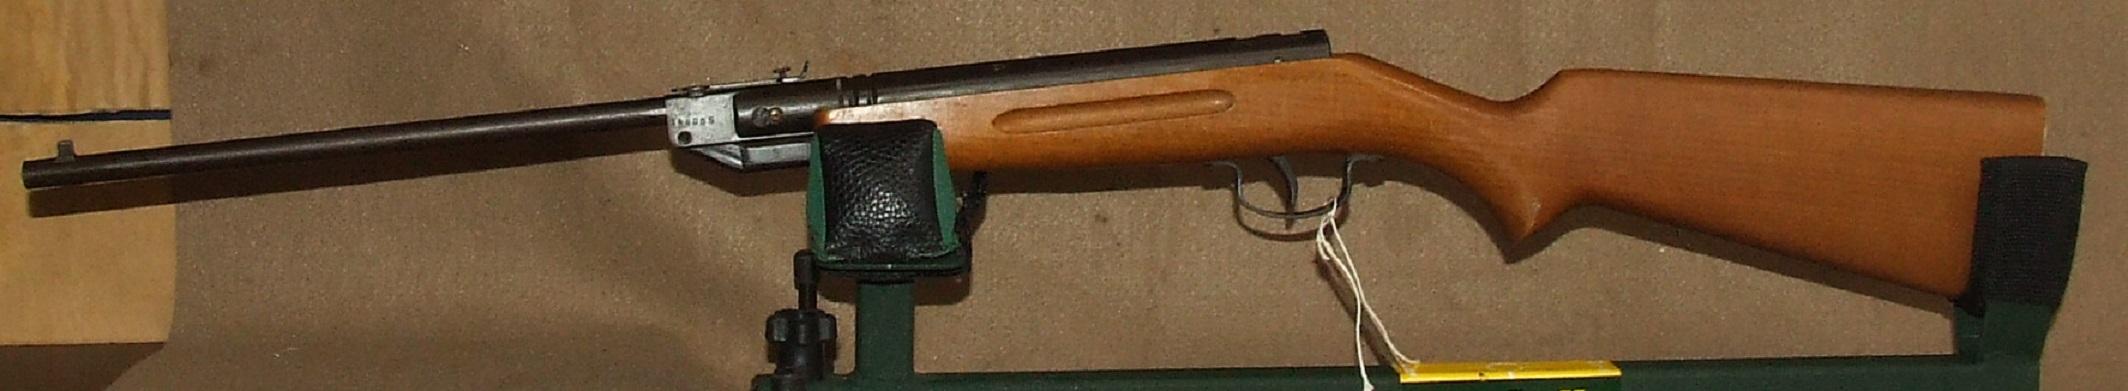 CZ Slavia Model 618  .177 Cal.  Break Barrel Cocking Gun